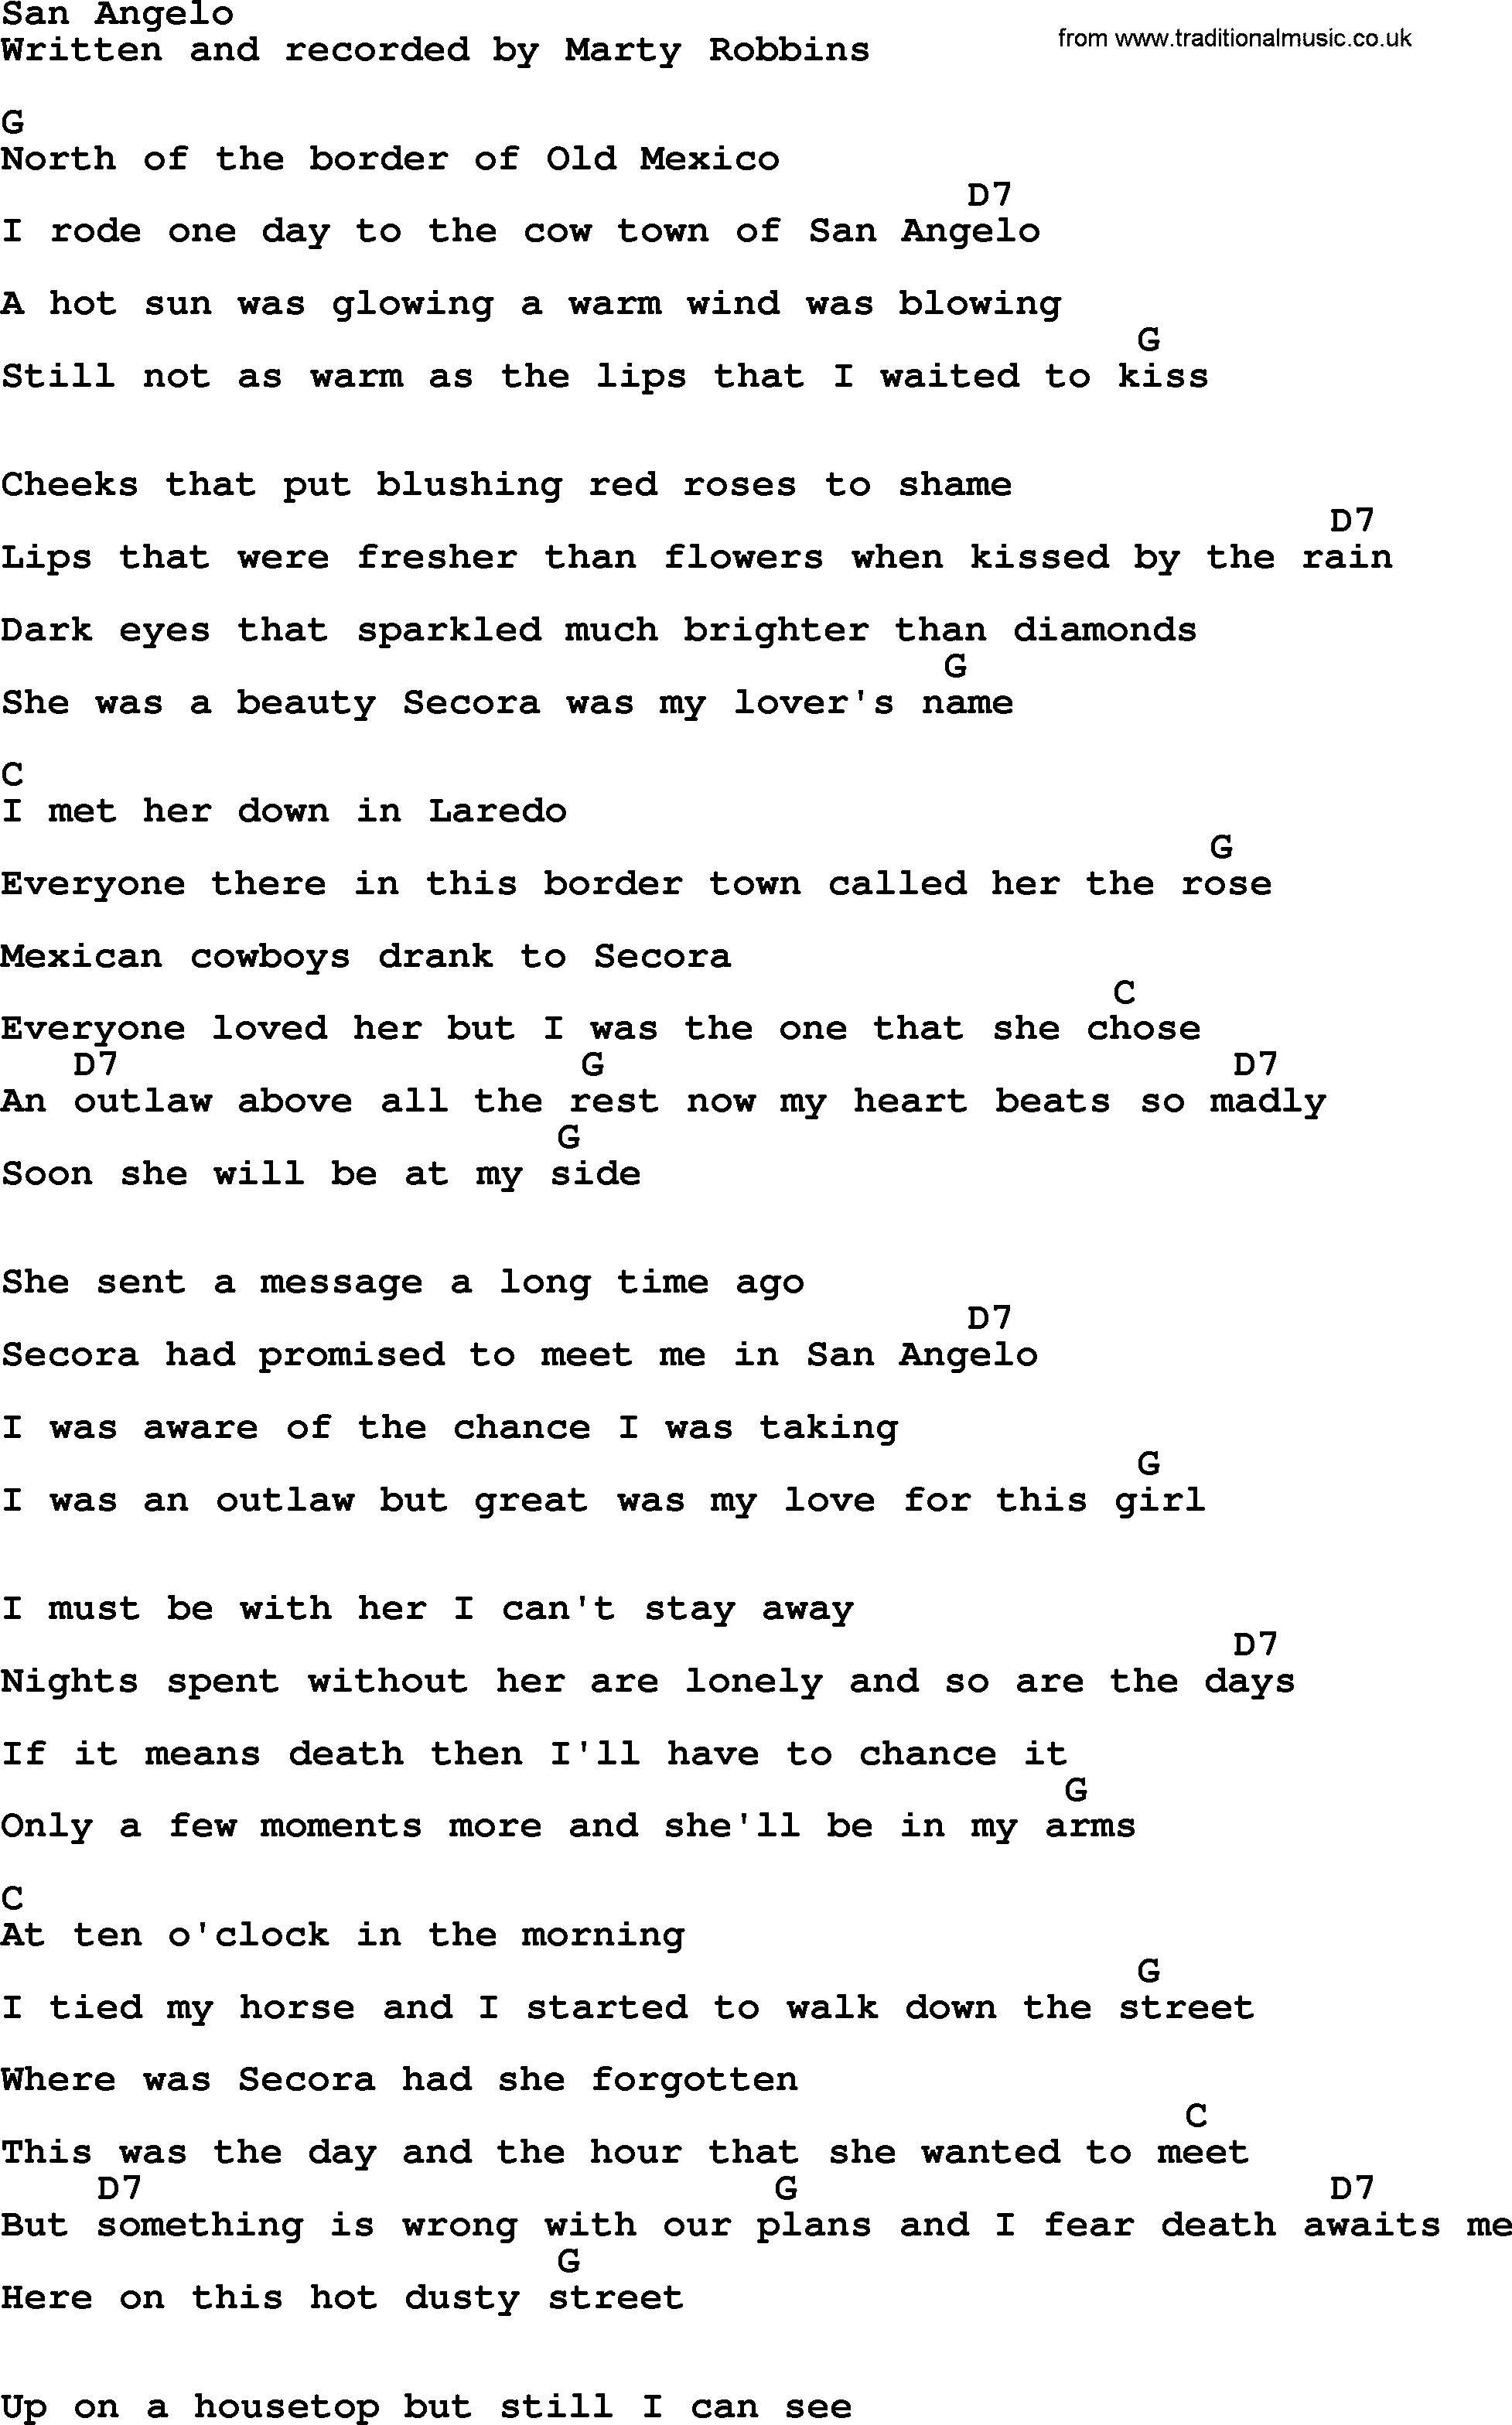 Marty Robbins song: San Angelo, lyrics and chords